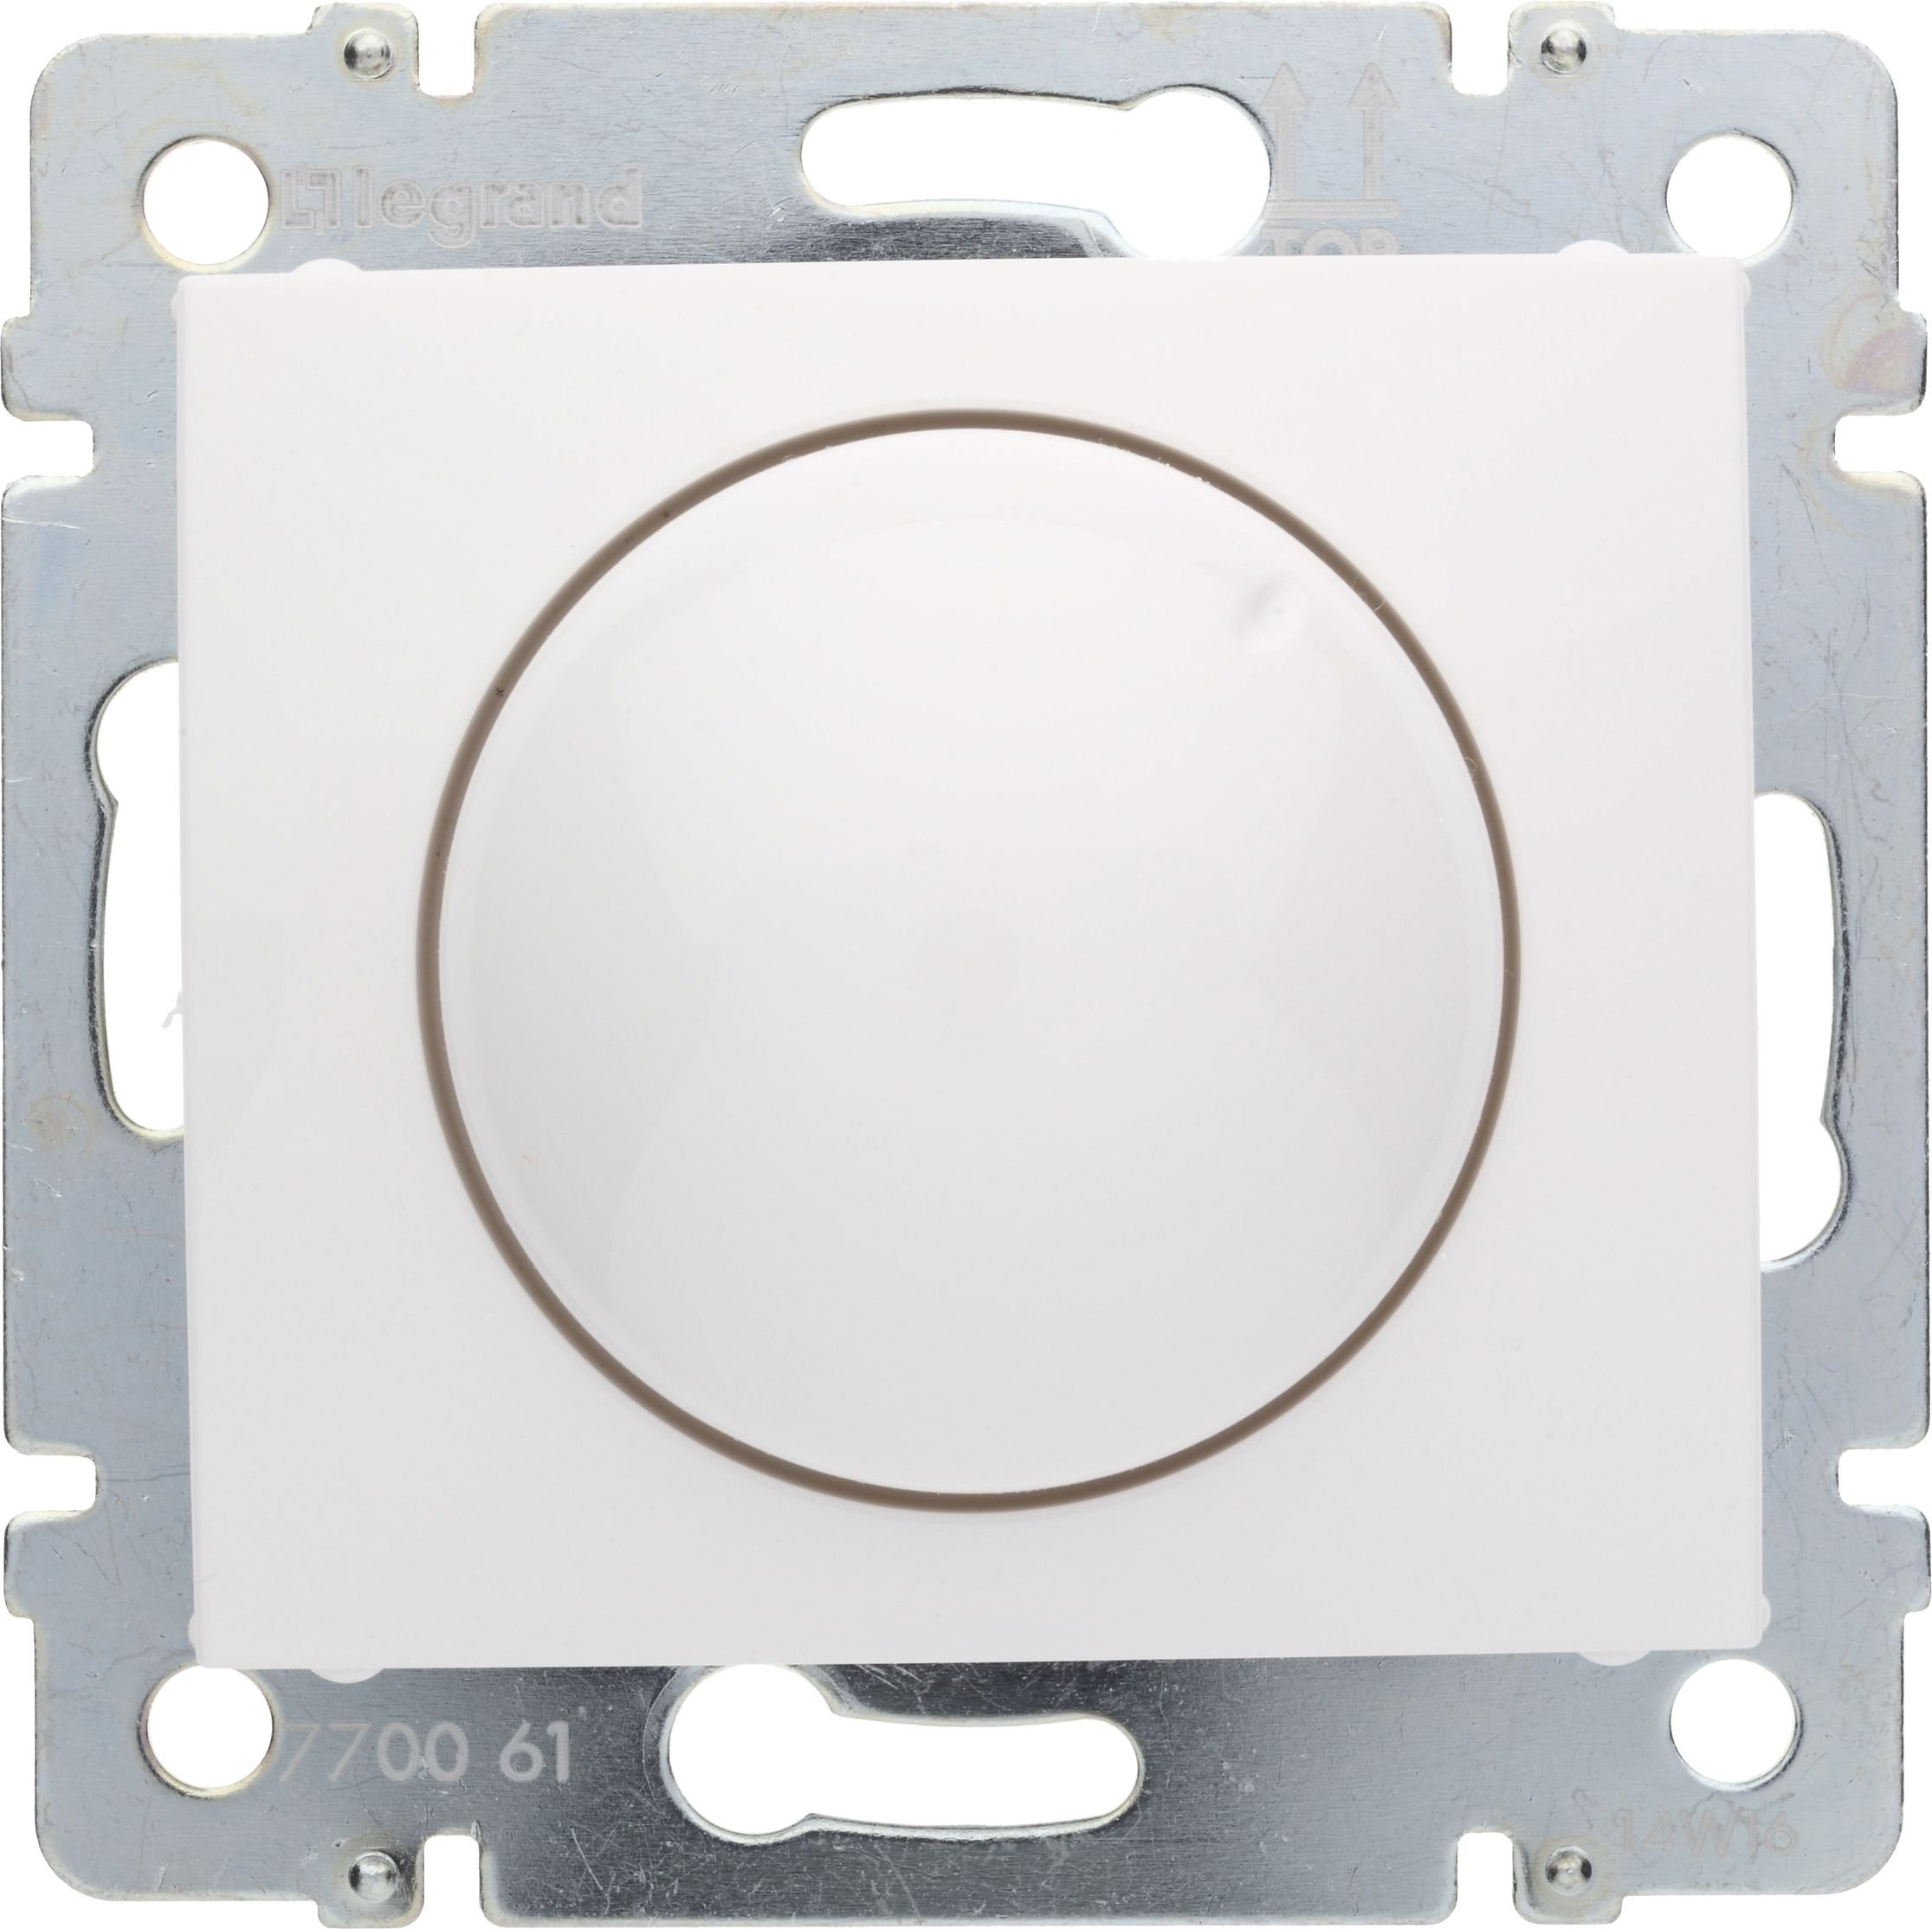 Variator rotativ Valena pentru lampi cu incandescenta si halogen de 40-400W, alb